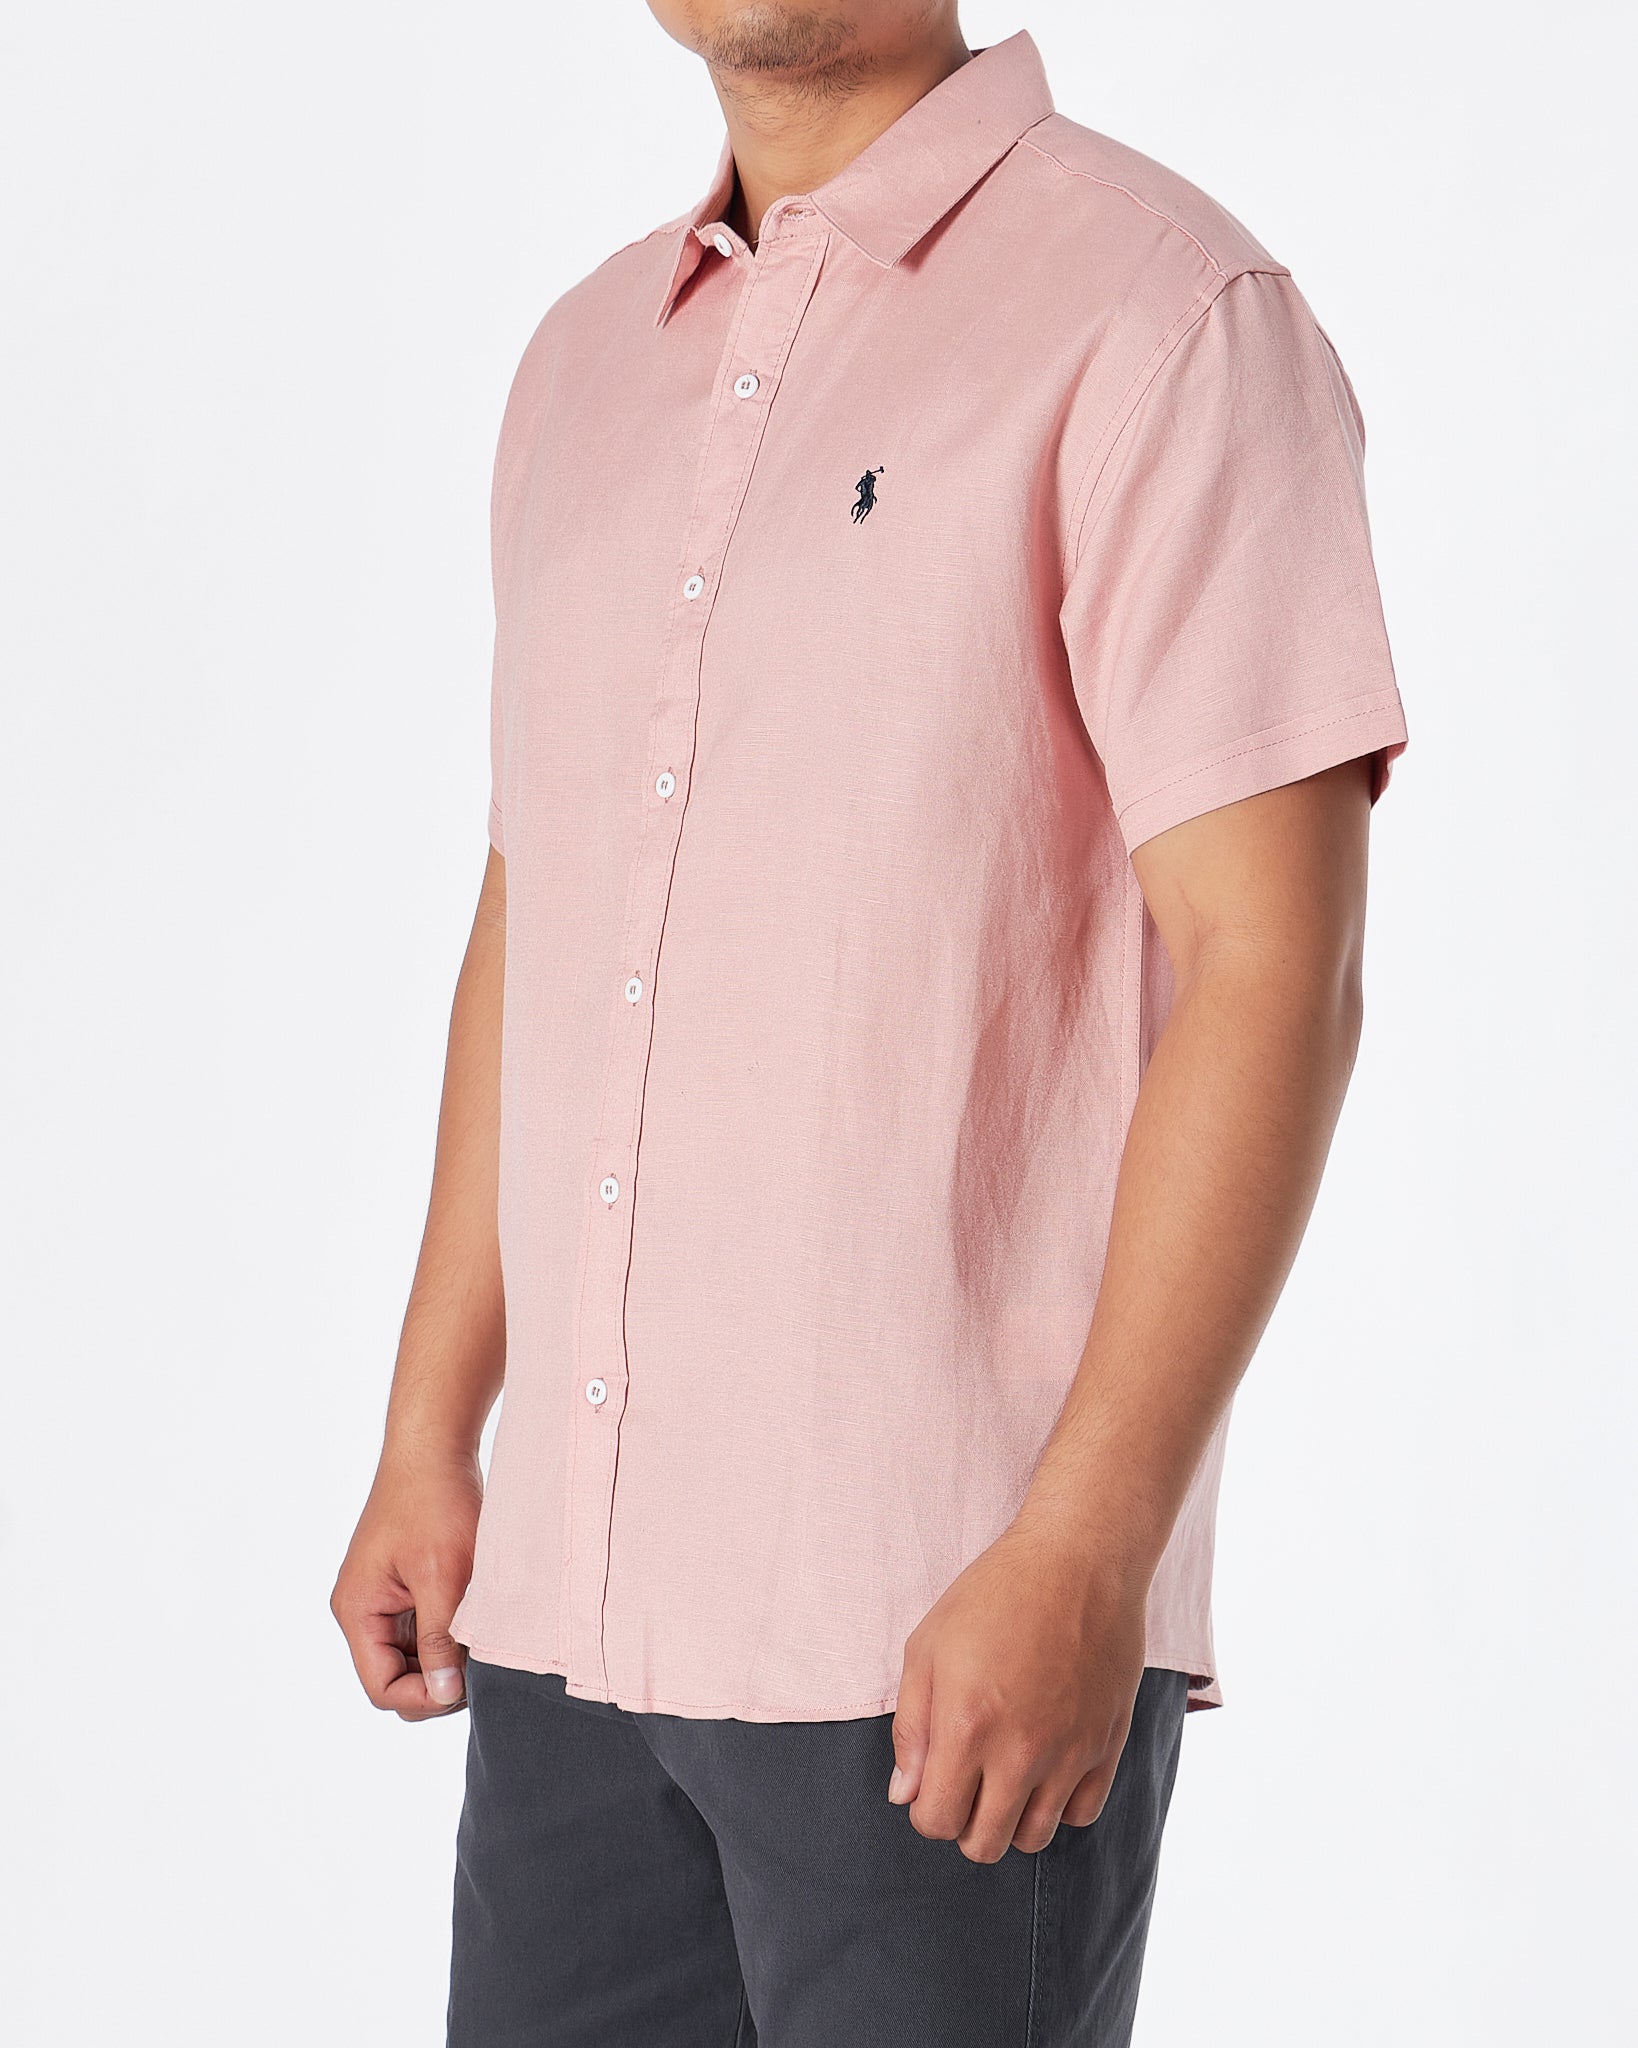 RL 棉质男士粉色衬衫短袖 28.90